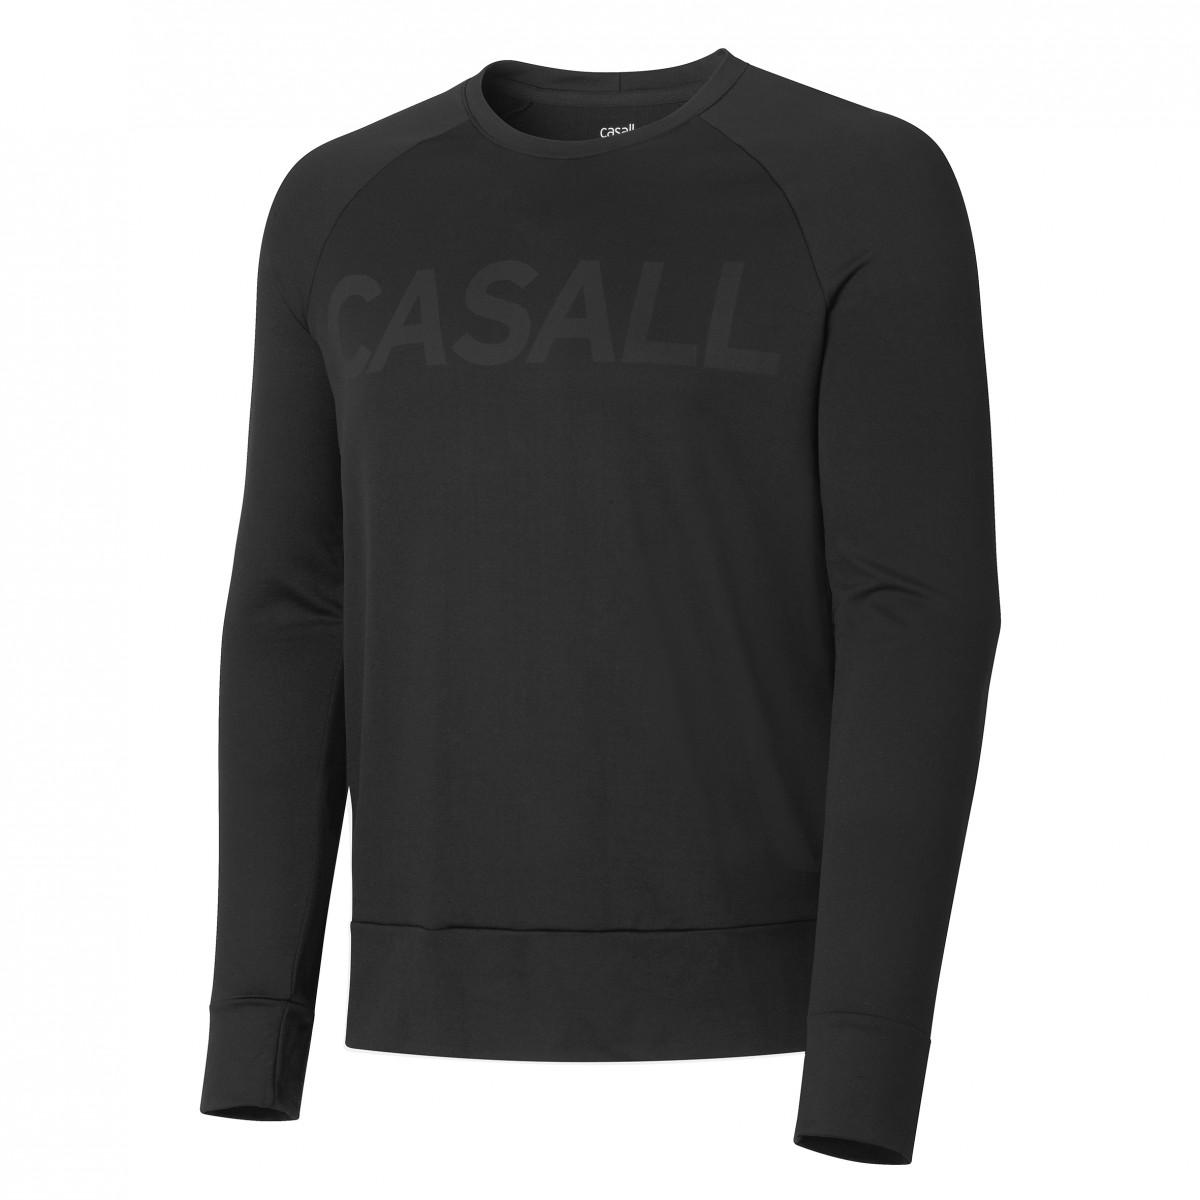 casall-pure-crewneck-sweatshirt